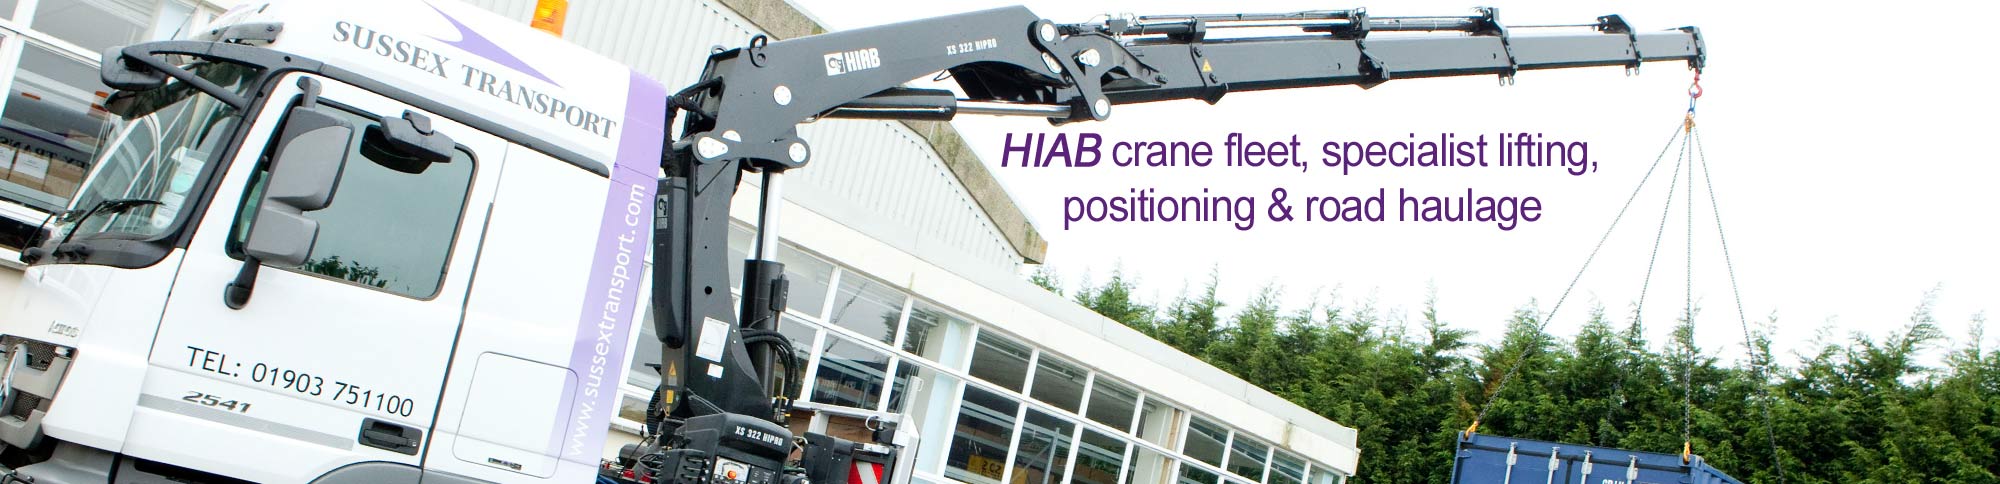 HIAB crane fleet, specialist lifting, positioning & road haulage.